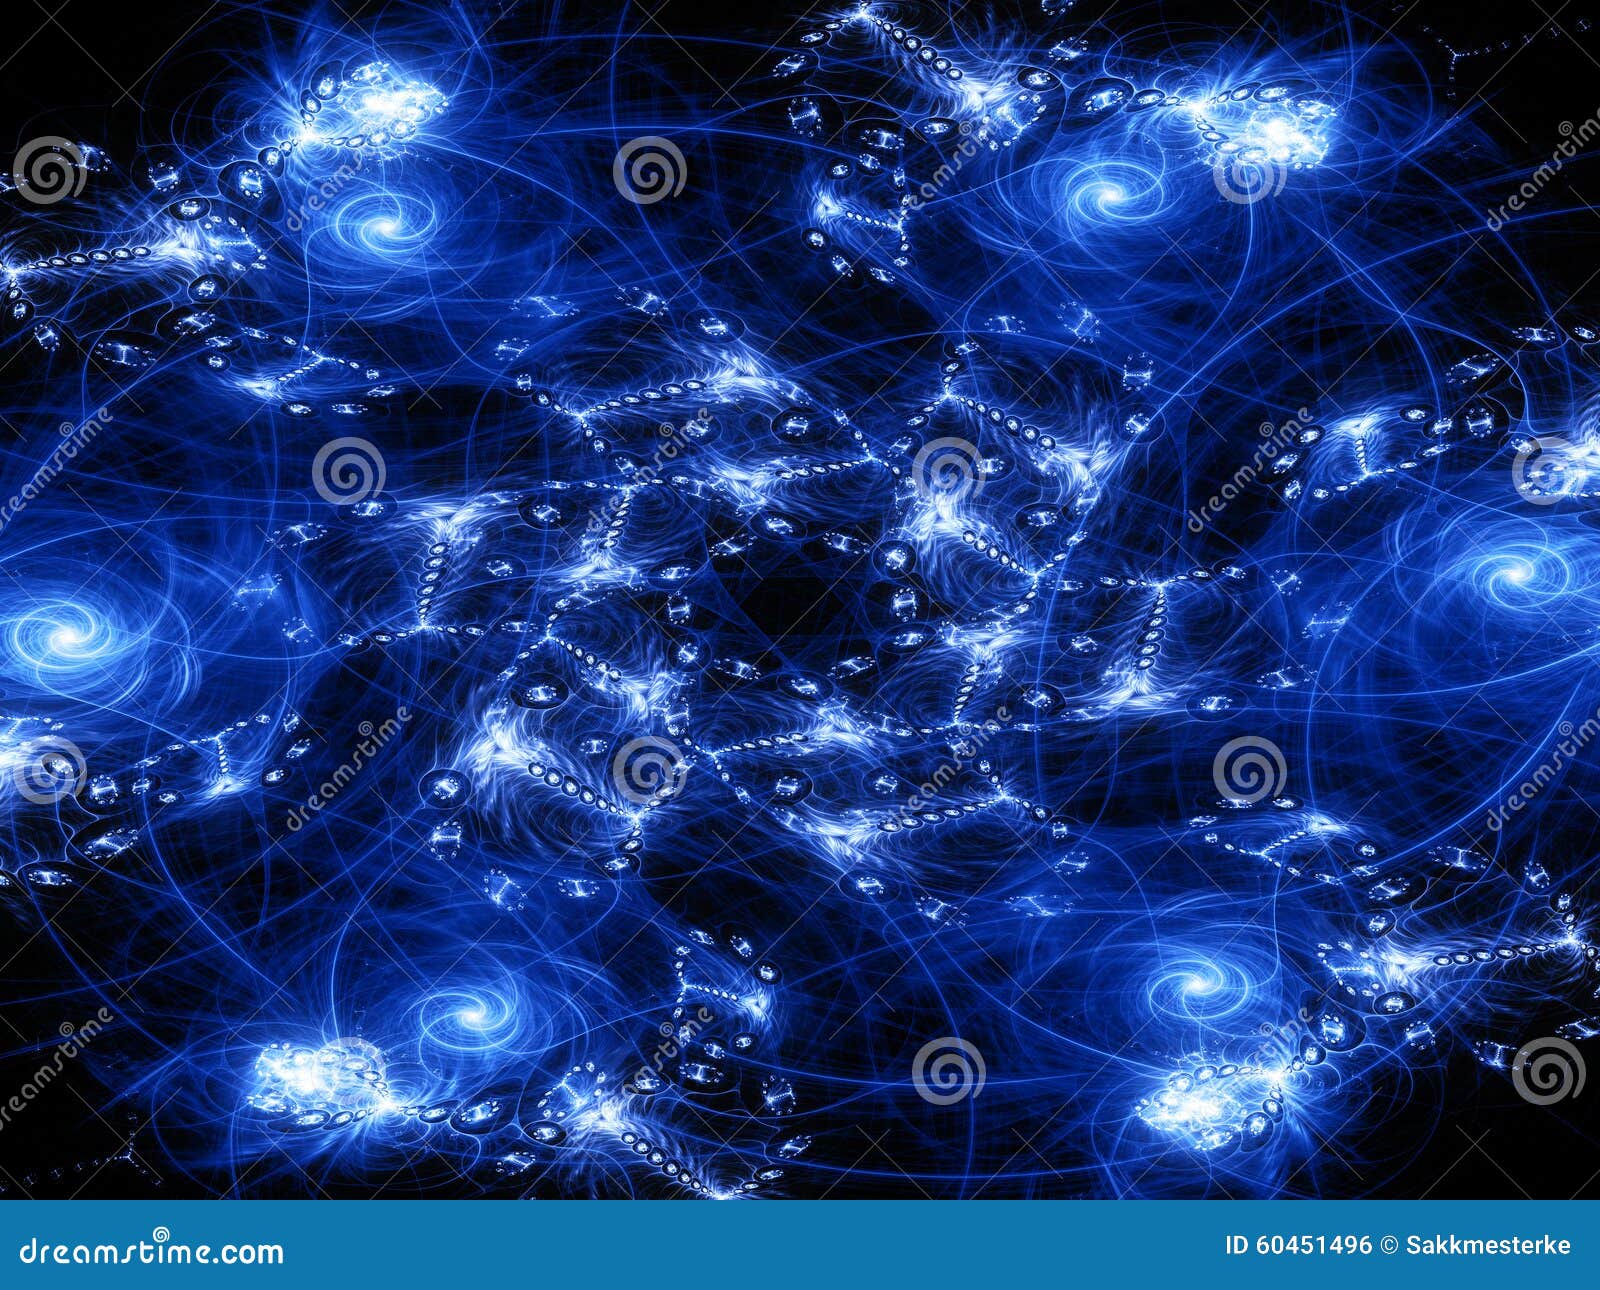 blue glowing quantum fractal patterns